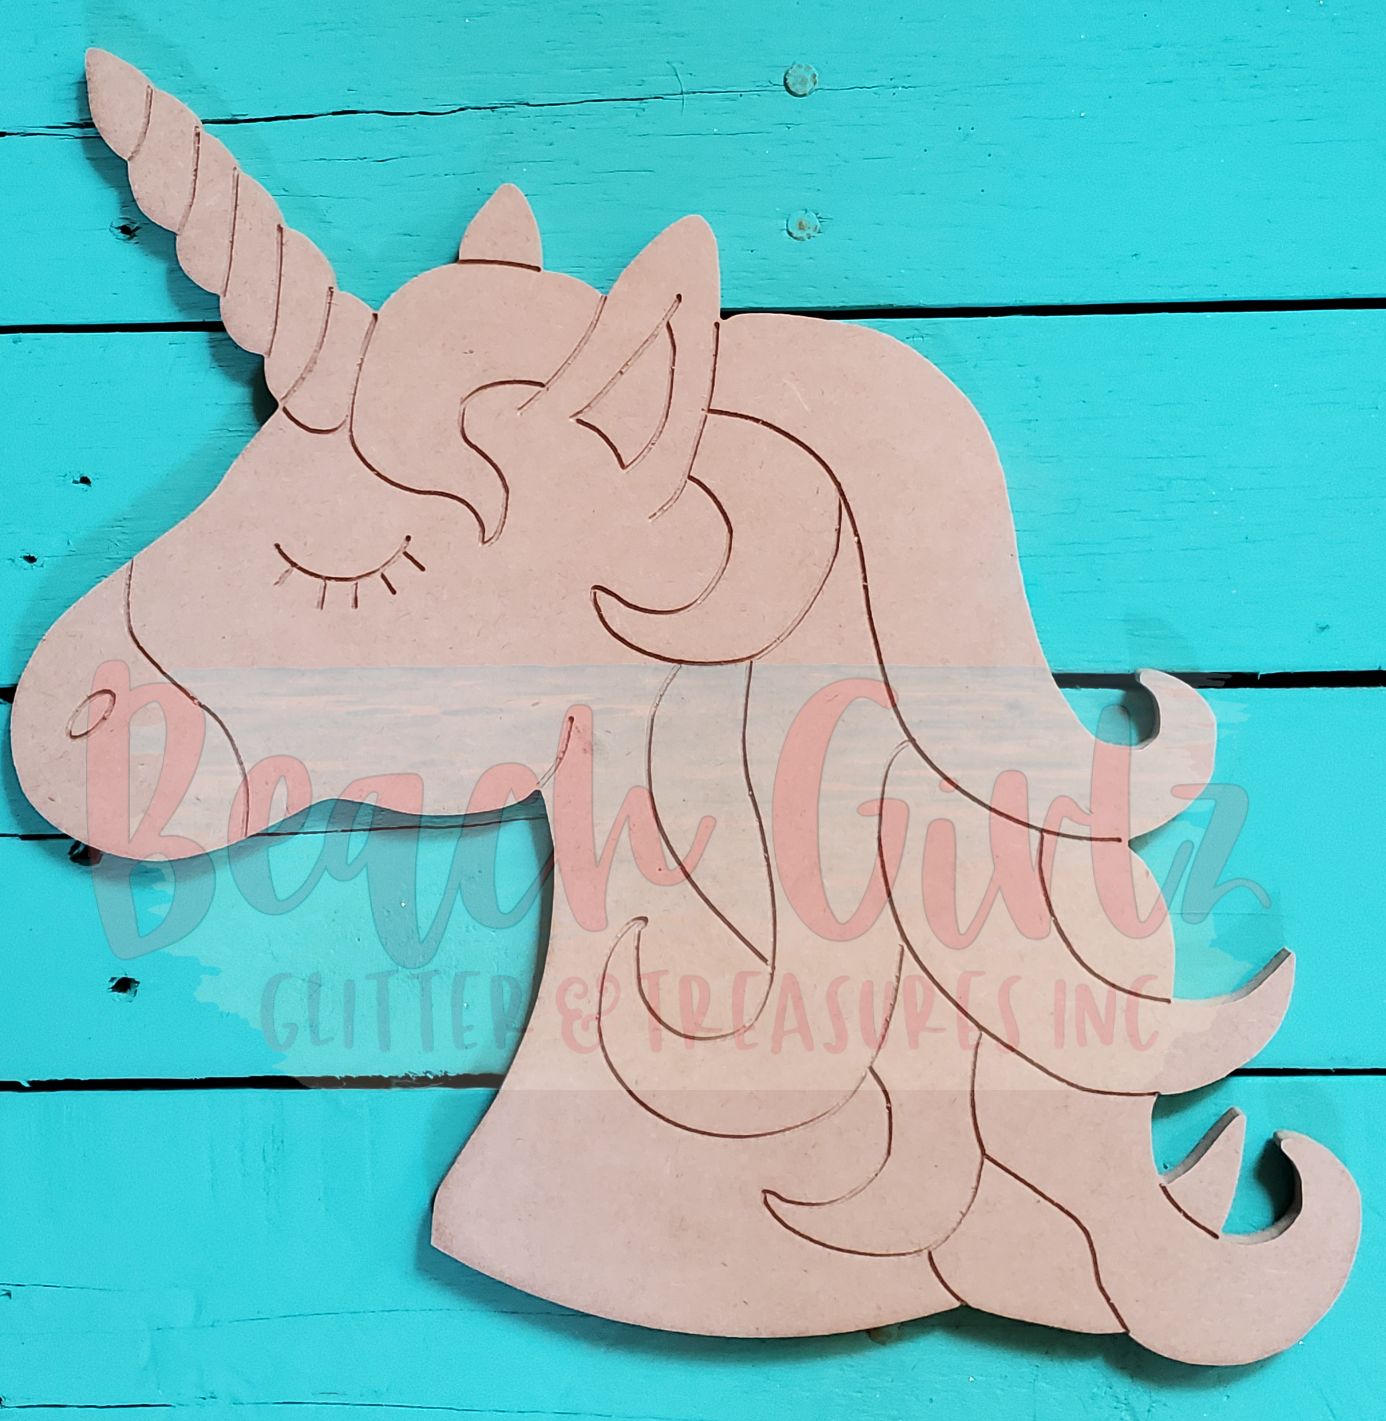 12" etched unicorn head